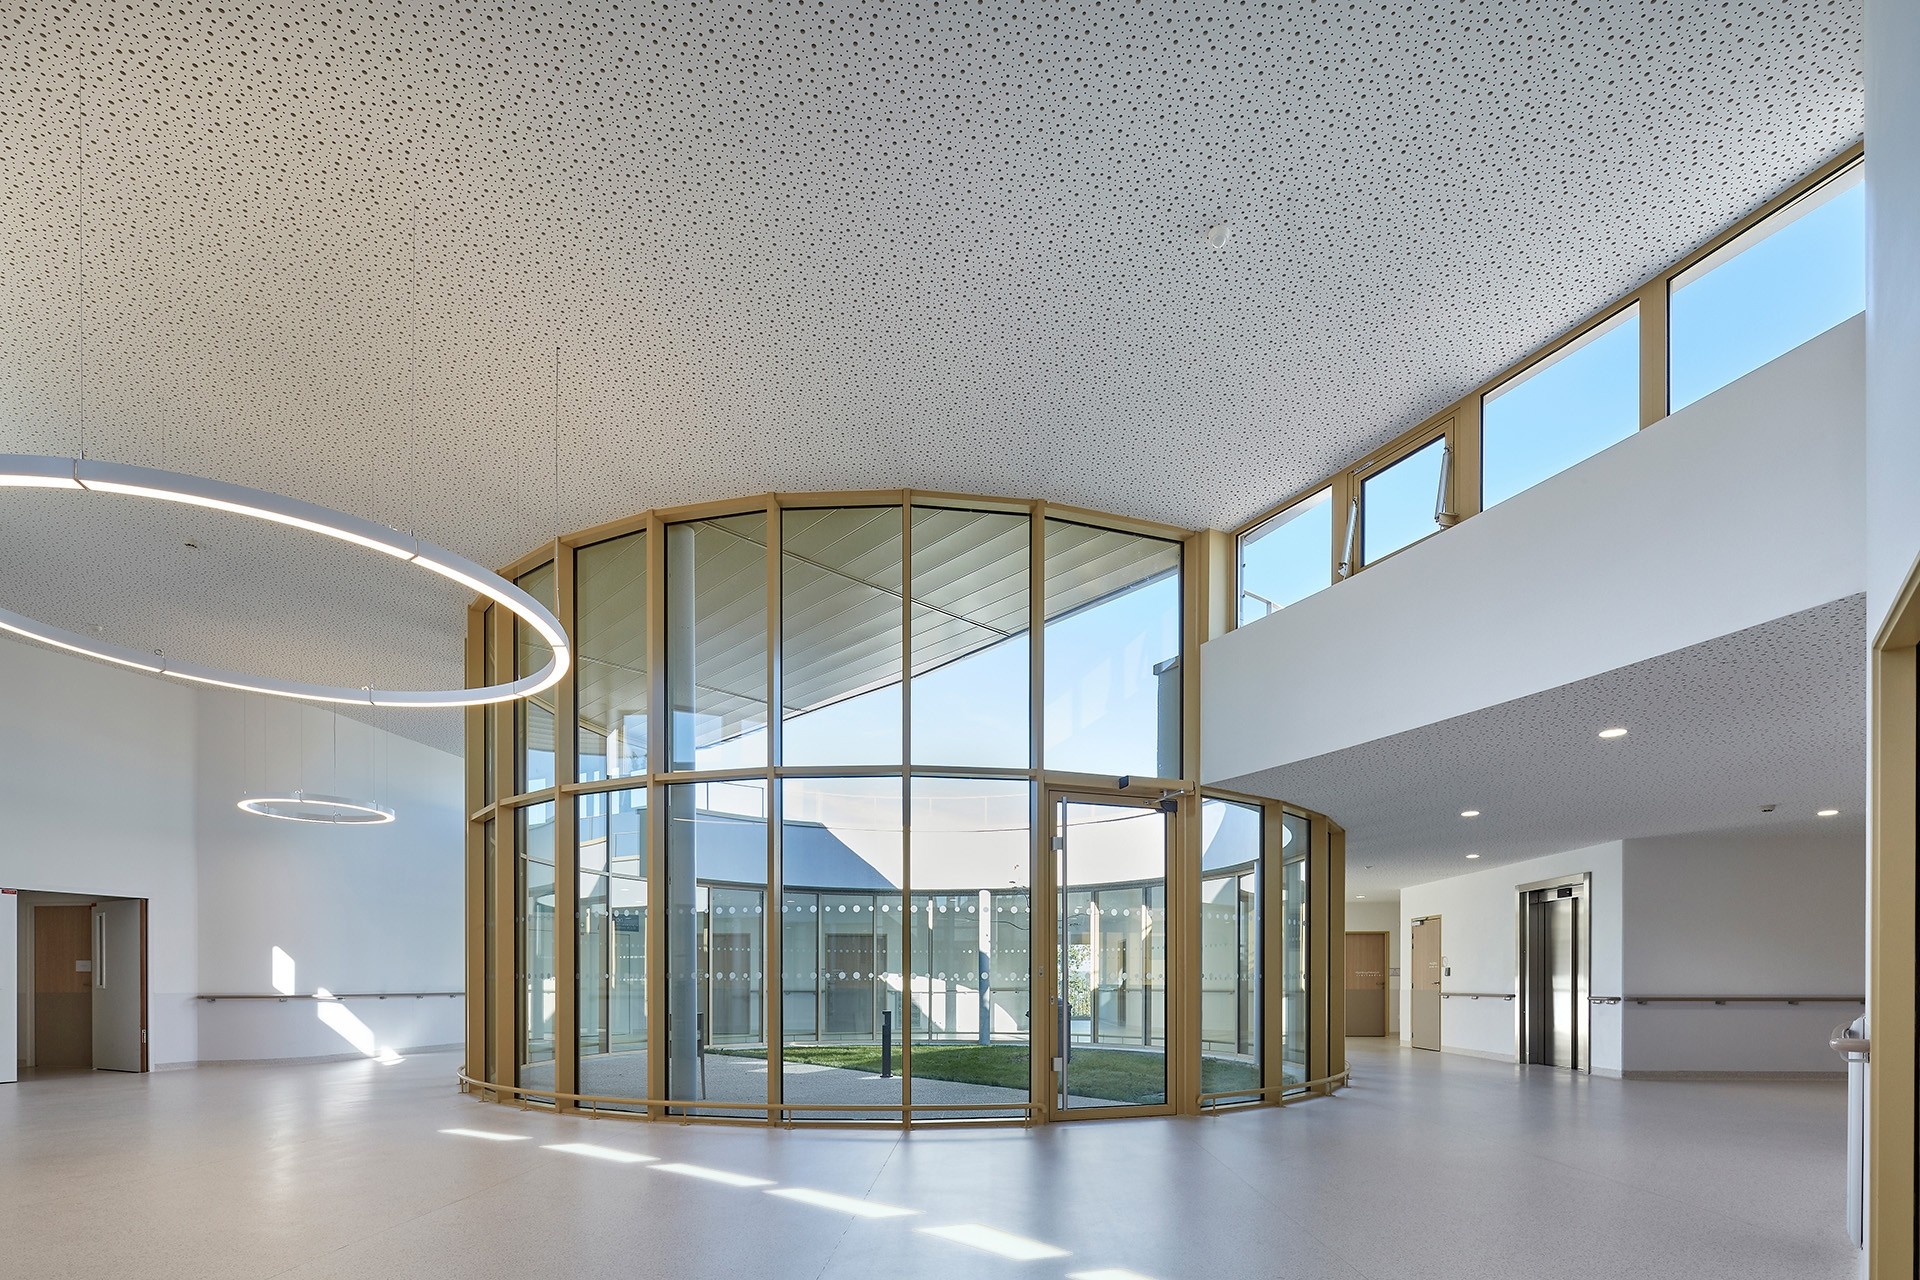 Creil (60), FAM MAS 65 lits - Agence Catherine Dormoy Architectes